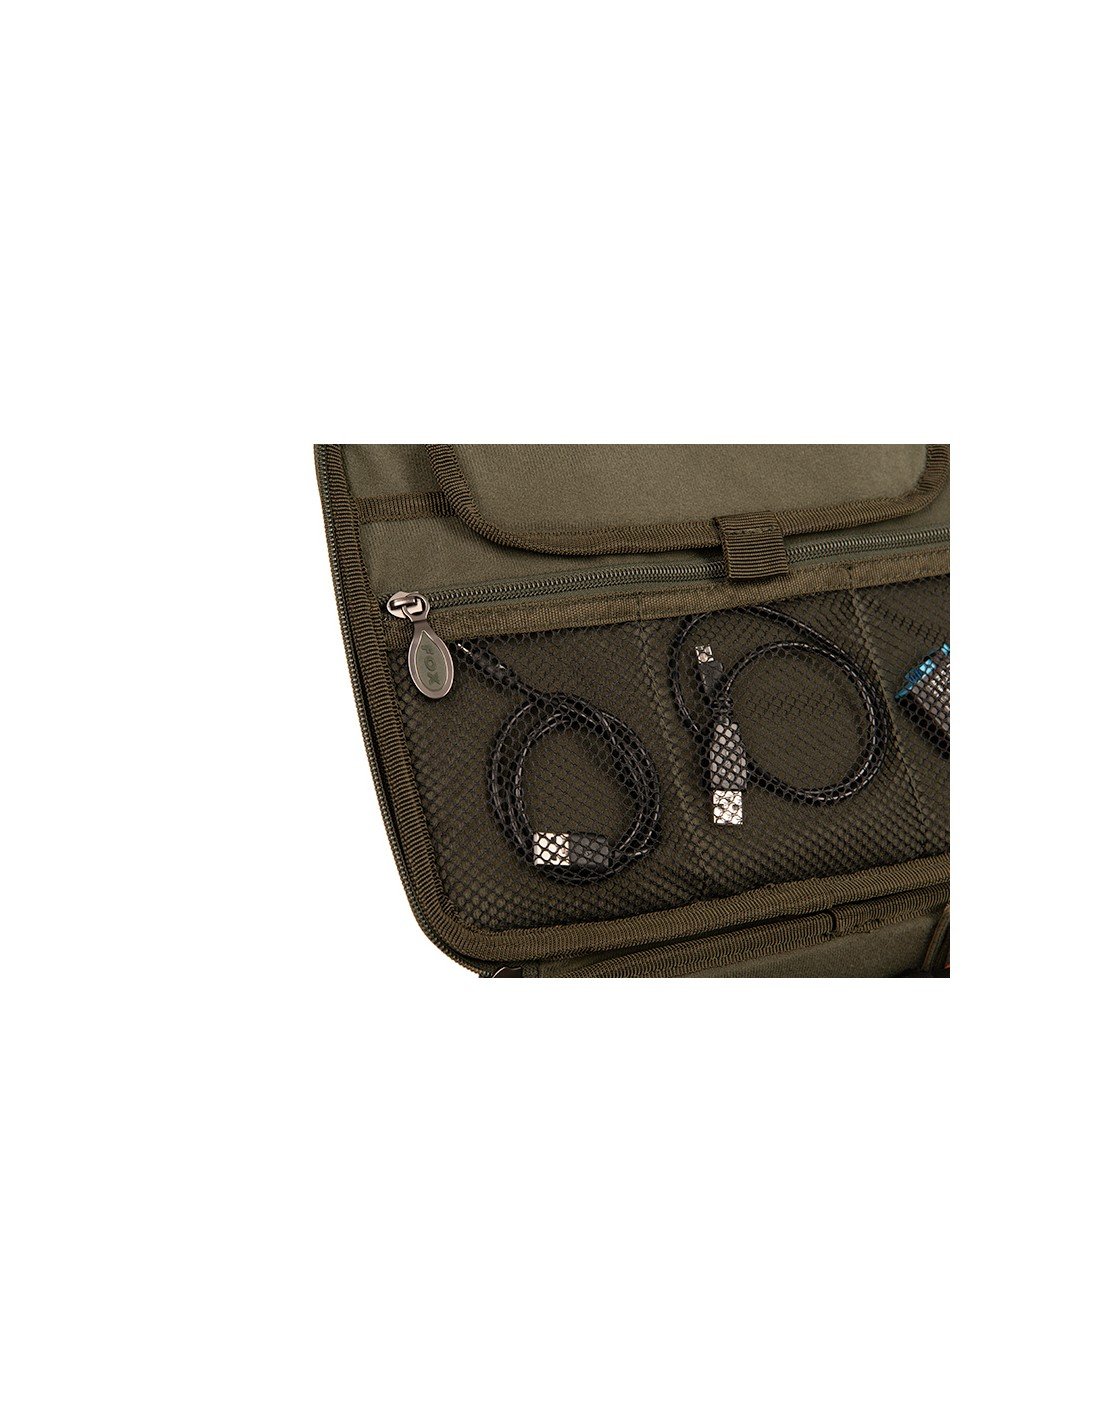 FOX Camolite Deluxe Gadget Safe чанта за батерия и електорника